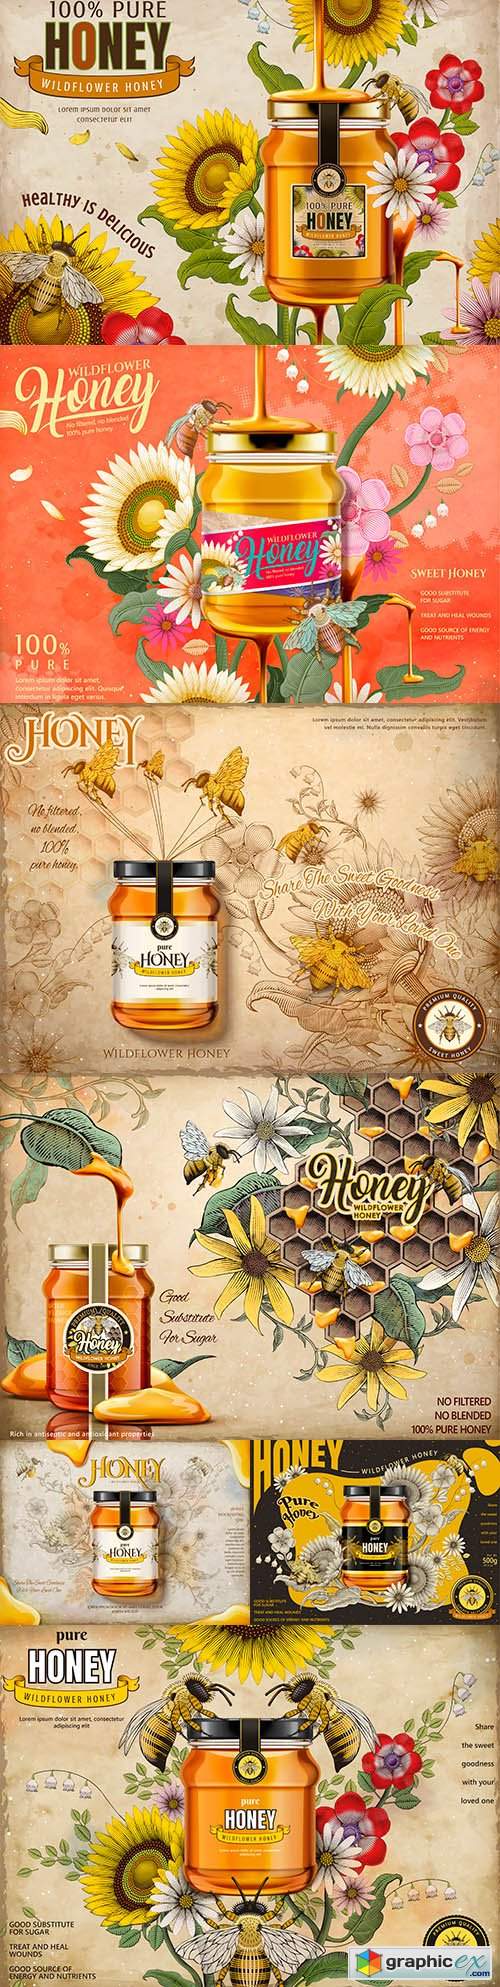  Advertising tasty honey from field flowers in glass jar illustration 